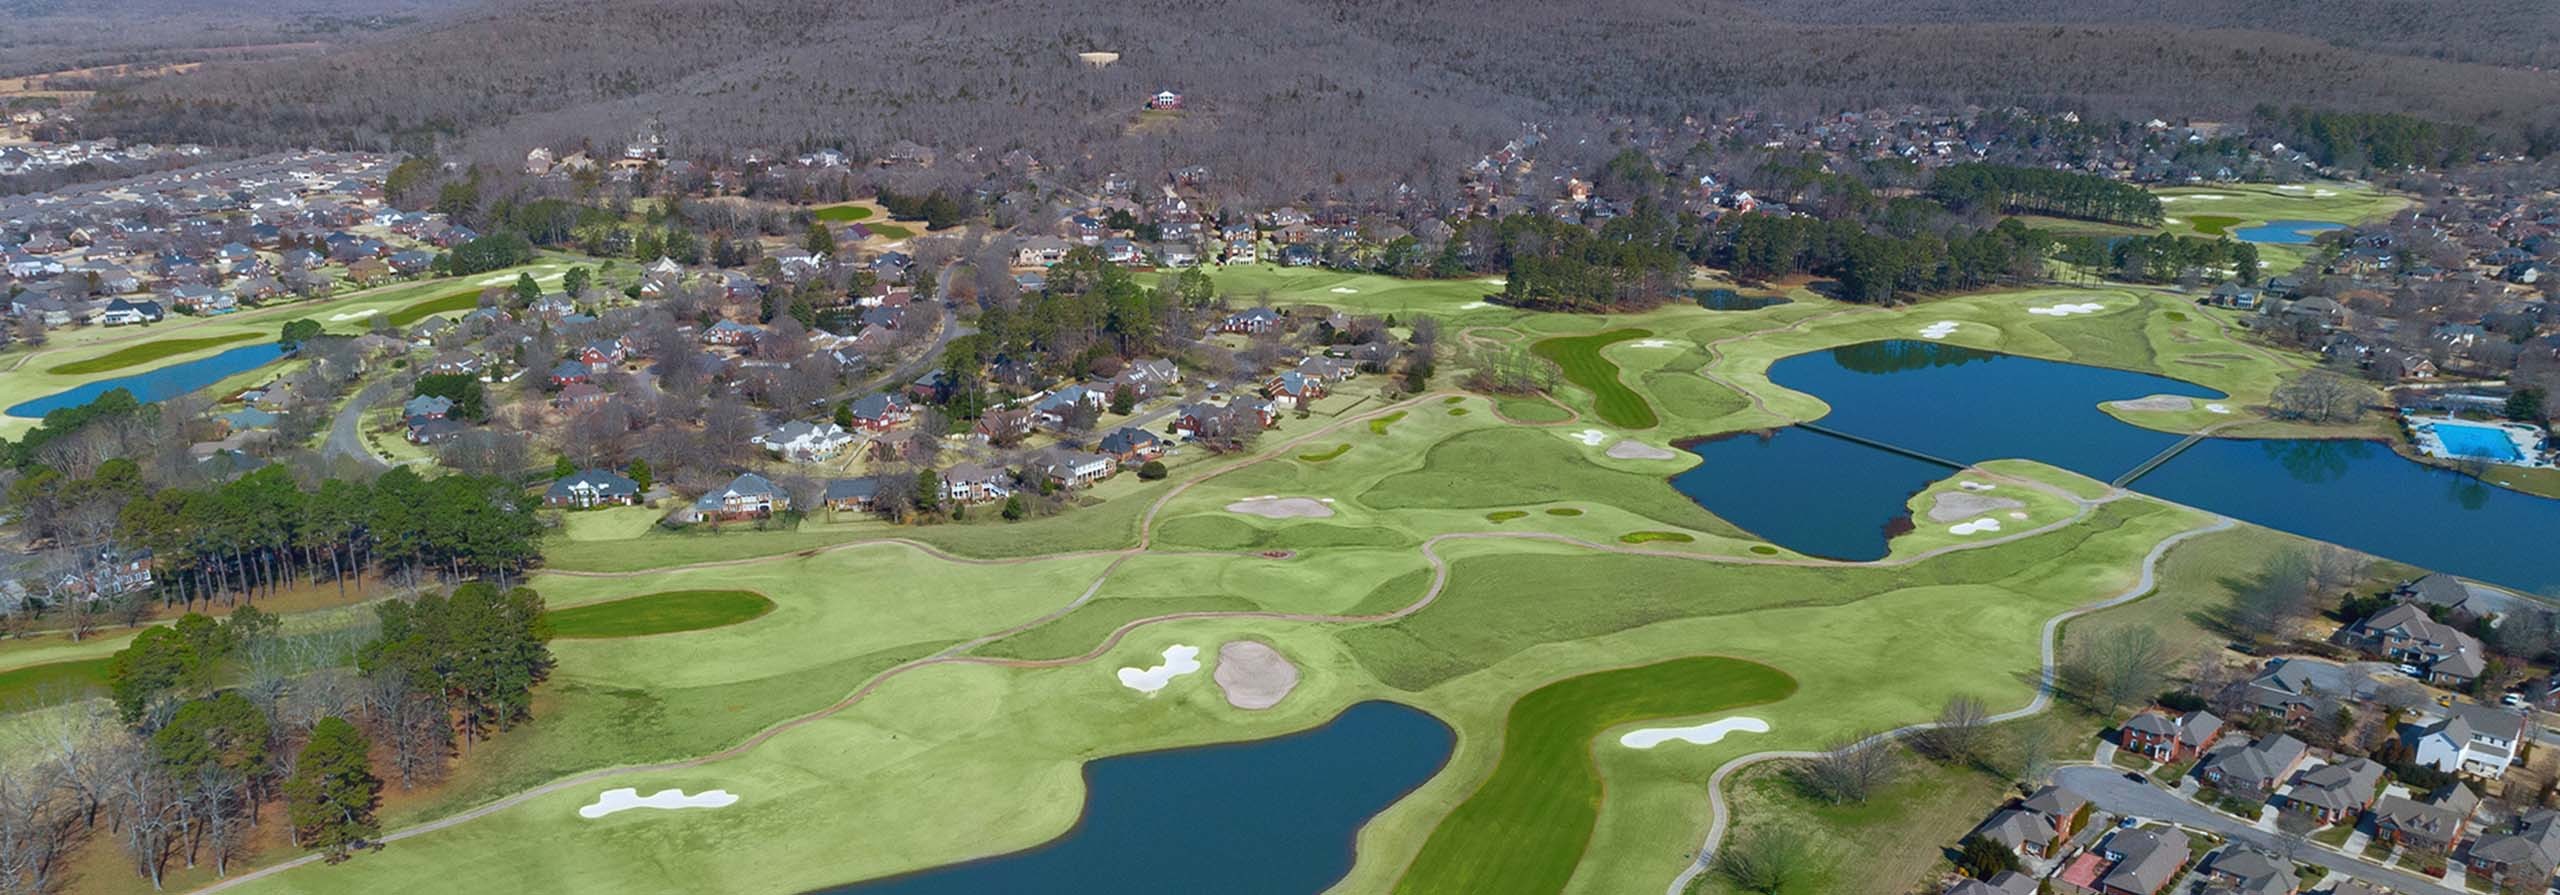 Aerial view of a golf course in Hampton Cove, Alabama